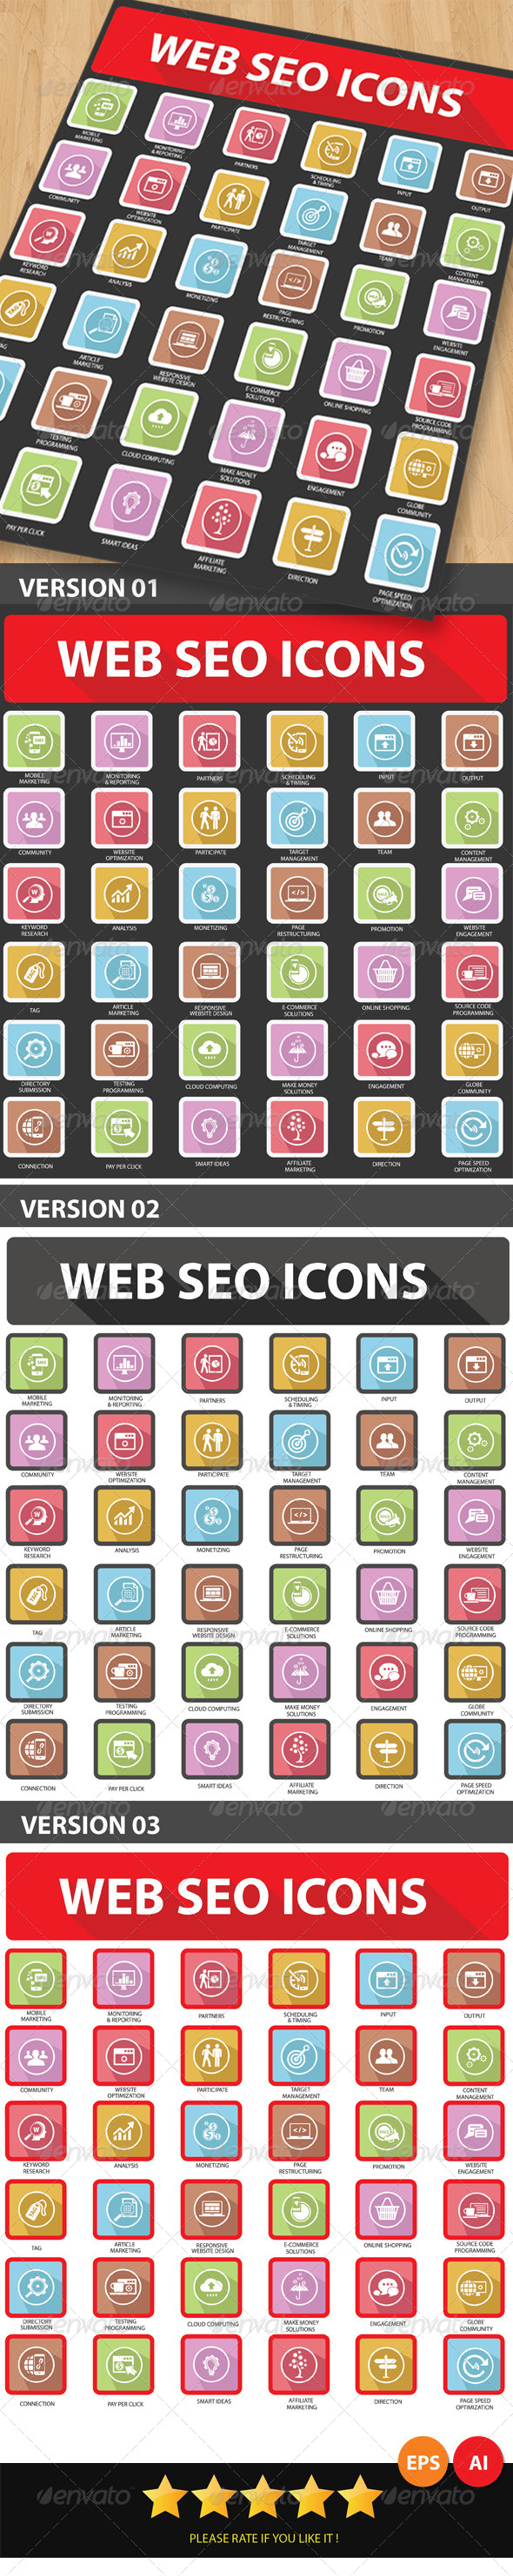 Web SEO Icons